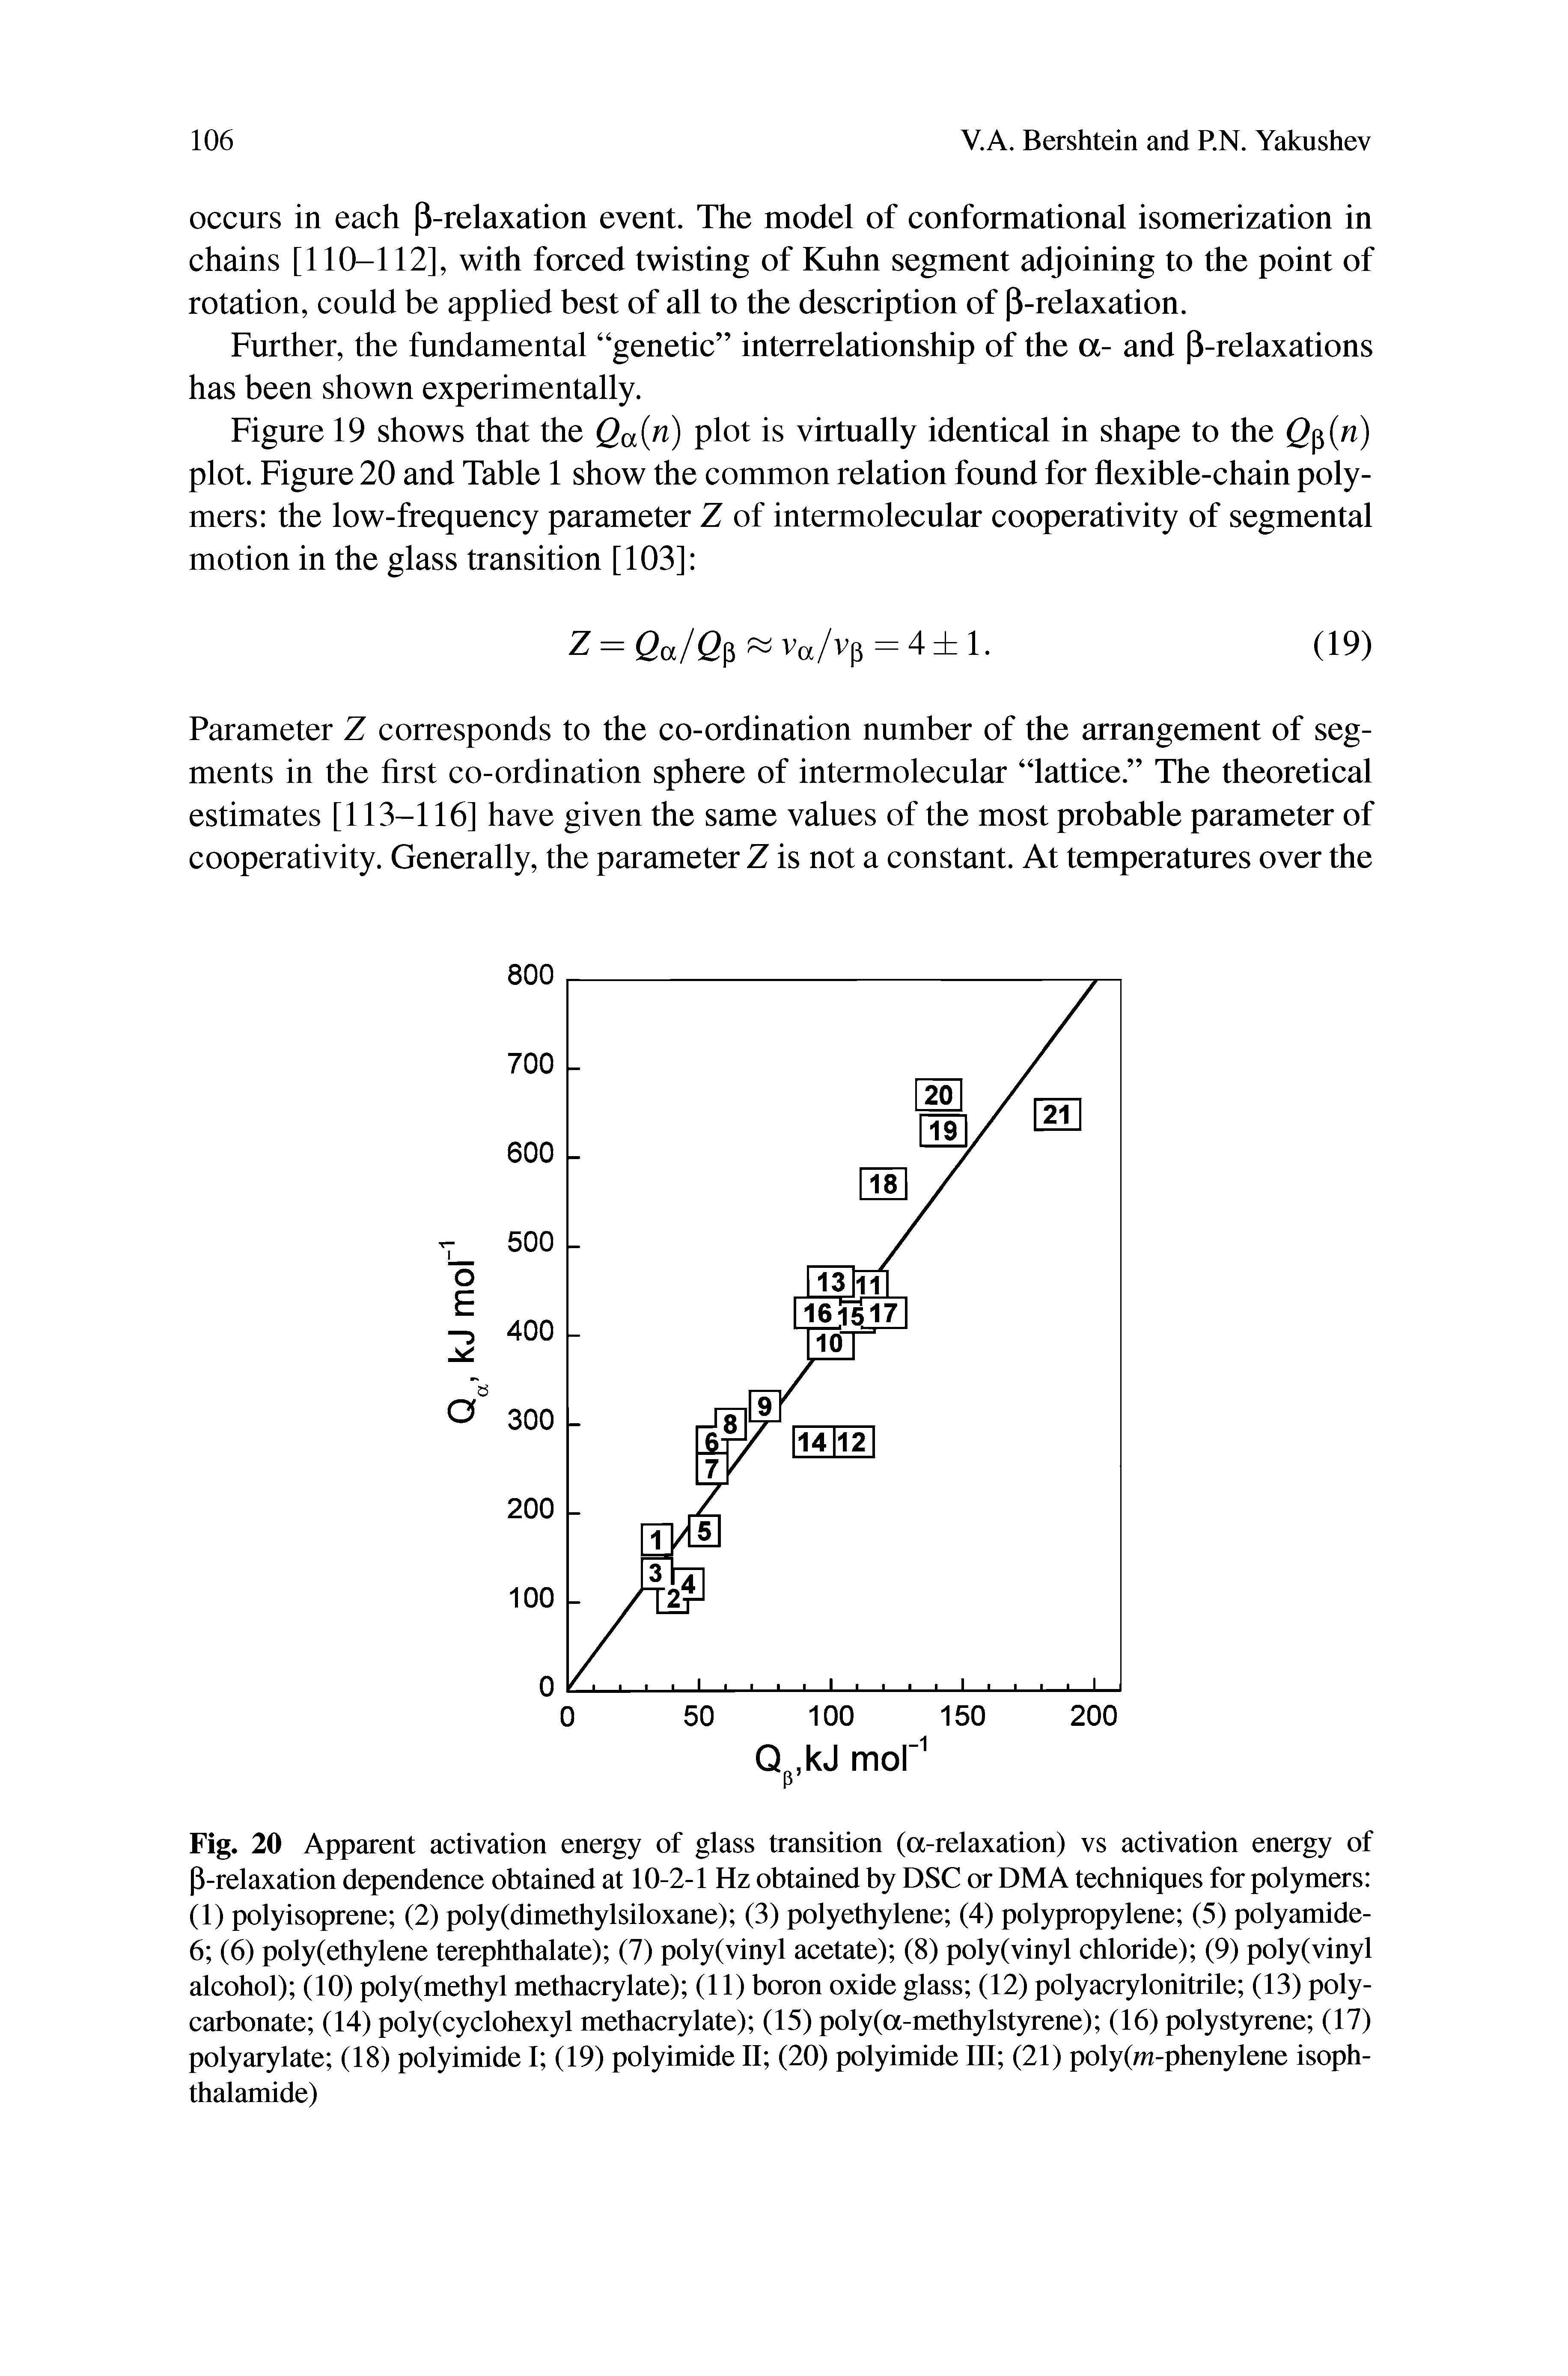 Fig. 20 Apparent activation energy of glass transition (a-relaxation) vs activation energy of p-relaxation dependence obtained at 10-2-1 Hz obtained by DSC or DMA techniques for polymers (1) polyisoprene (2) poly(dimethylsiloxane) (3) polyethylene (4) polypropylene (5) polyamide-6 (6) poly(ethylene terephthalate) (7) poly(vinyl acetate) (8) poly(vinyl chloride) (9) poly(vinyl alcohol) (10) poly(methyl methacrylate) (11) boron oxide glass (12) polyacrylonitrile (13) polycarbonate (14) poly(cyclohexyl methacrylate) (15) poly(a-methylstyrene) (16) polystyrene (17) polyarylate (18) polyimide I (19) polyimide II (20) polyimide III (21) poly(m-phenylene isoph-thalamide)...